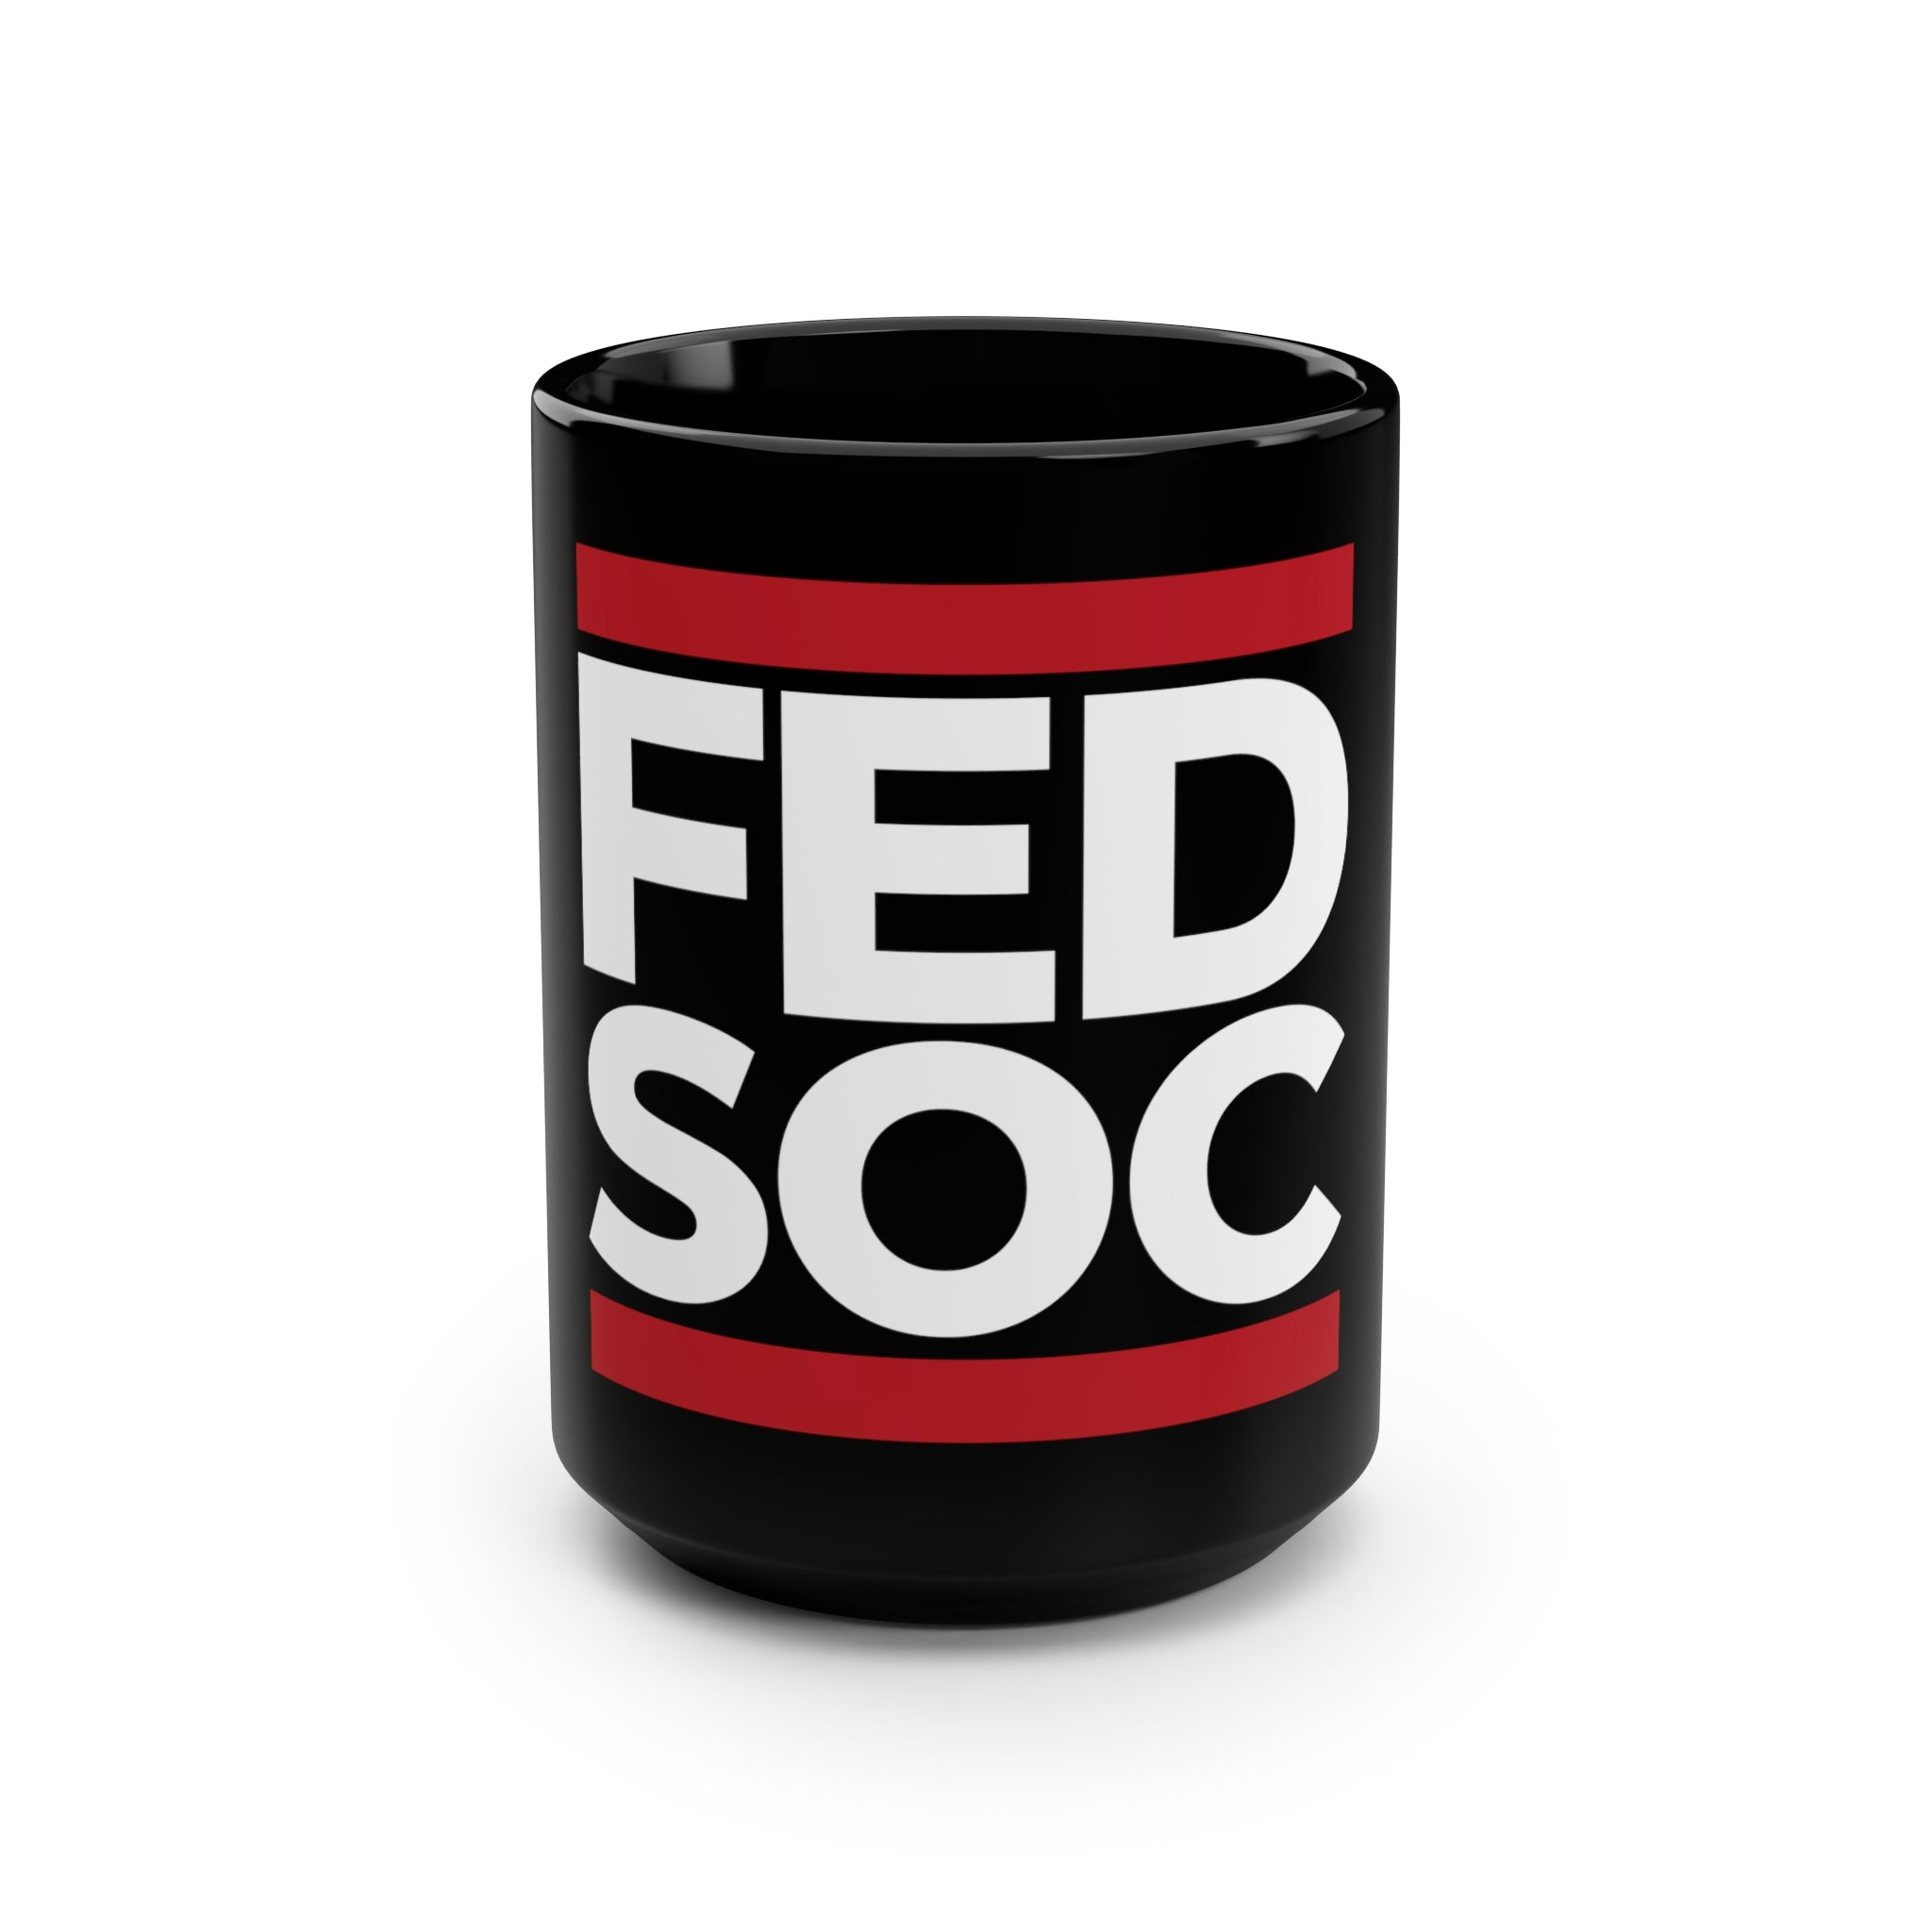 Run Fed Soc Mug (Fed Soc)